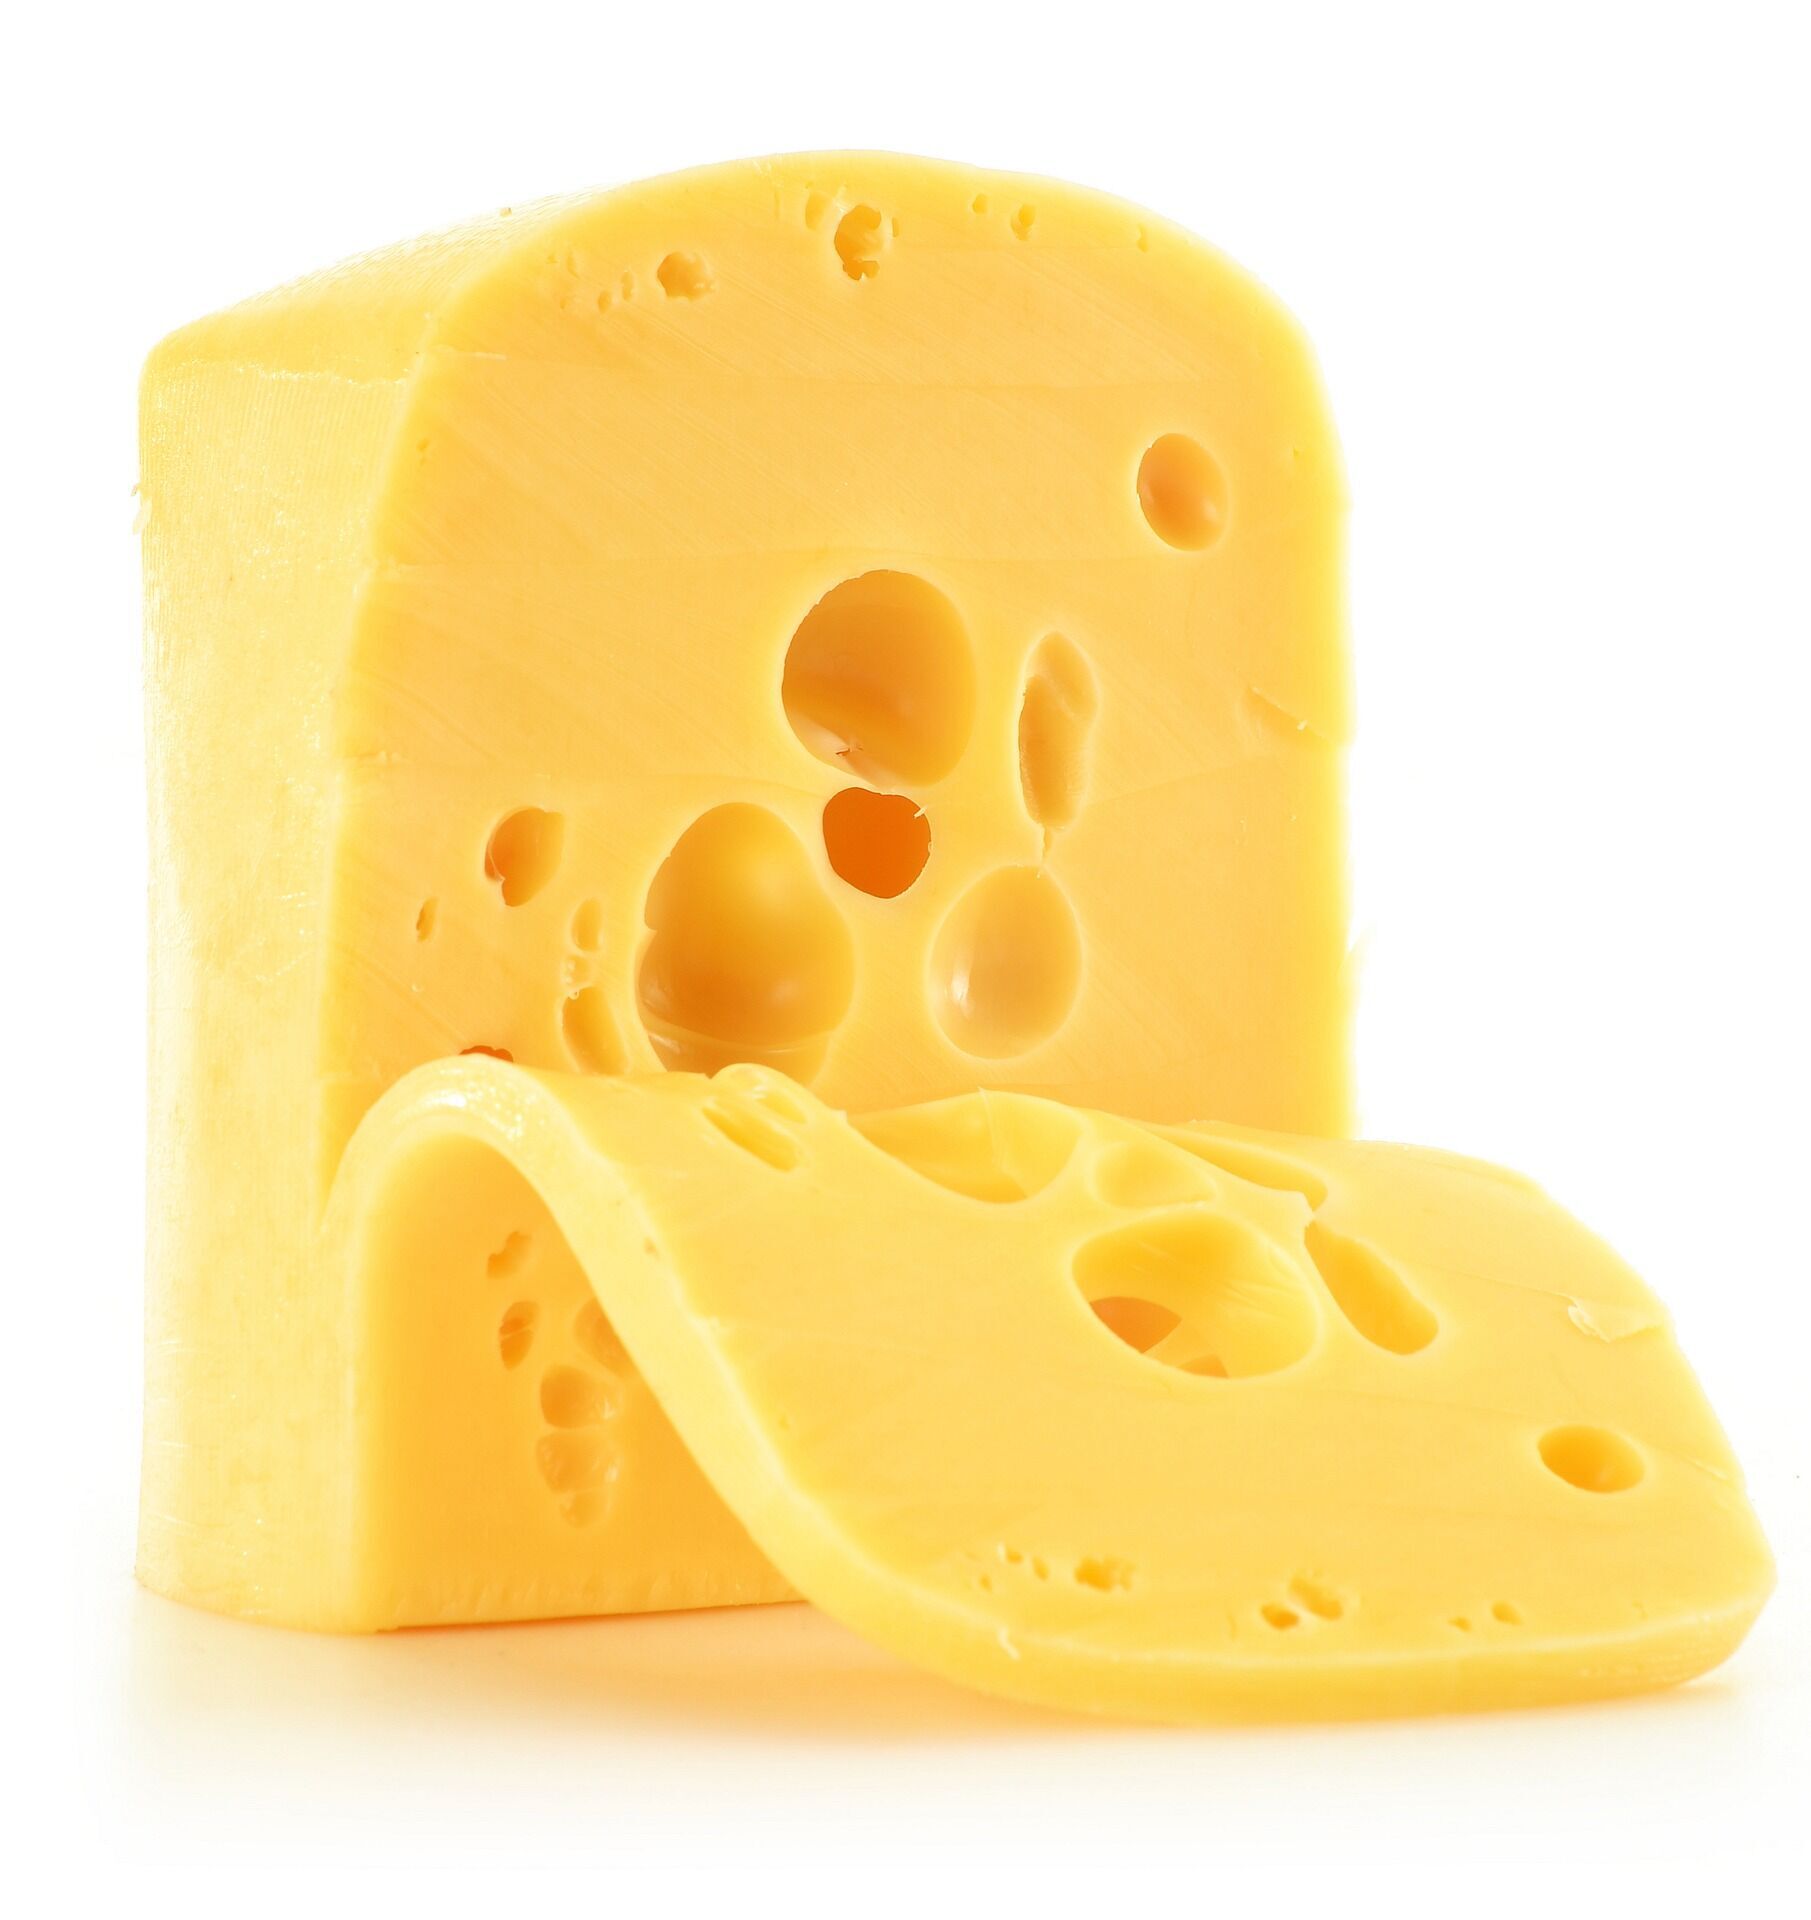 Твердый сыр